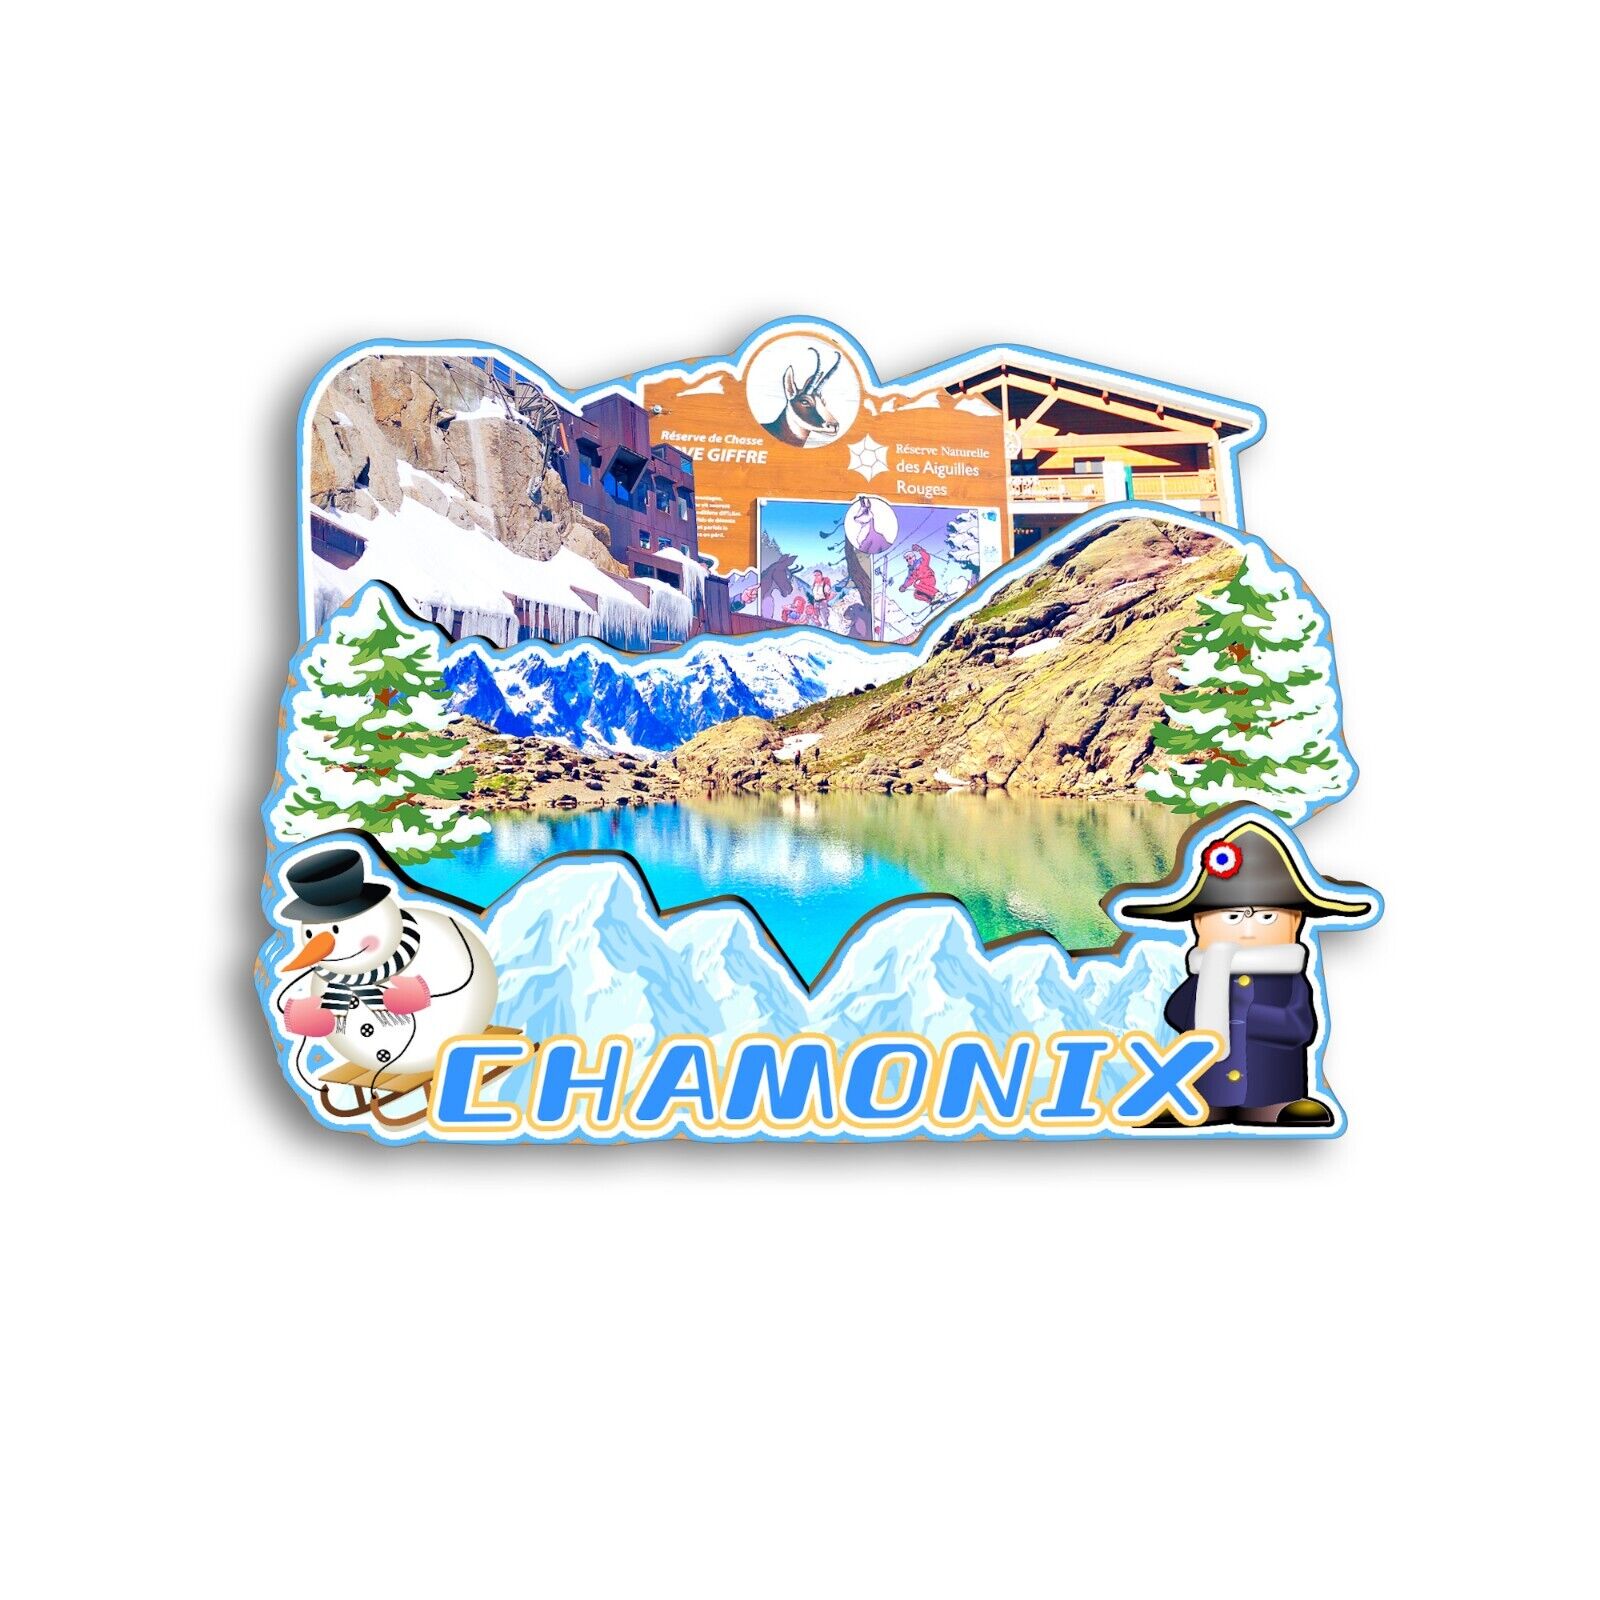 Chamonix France Refrigerator magnet 3D travel souvenirs wood craft gifts